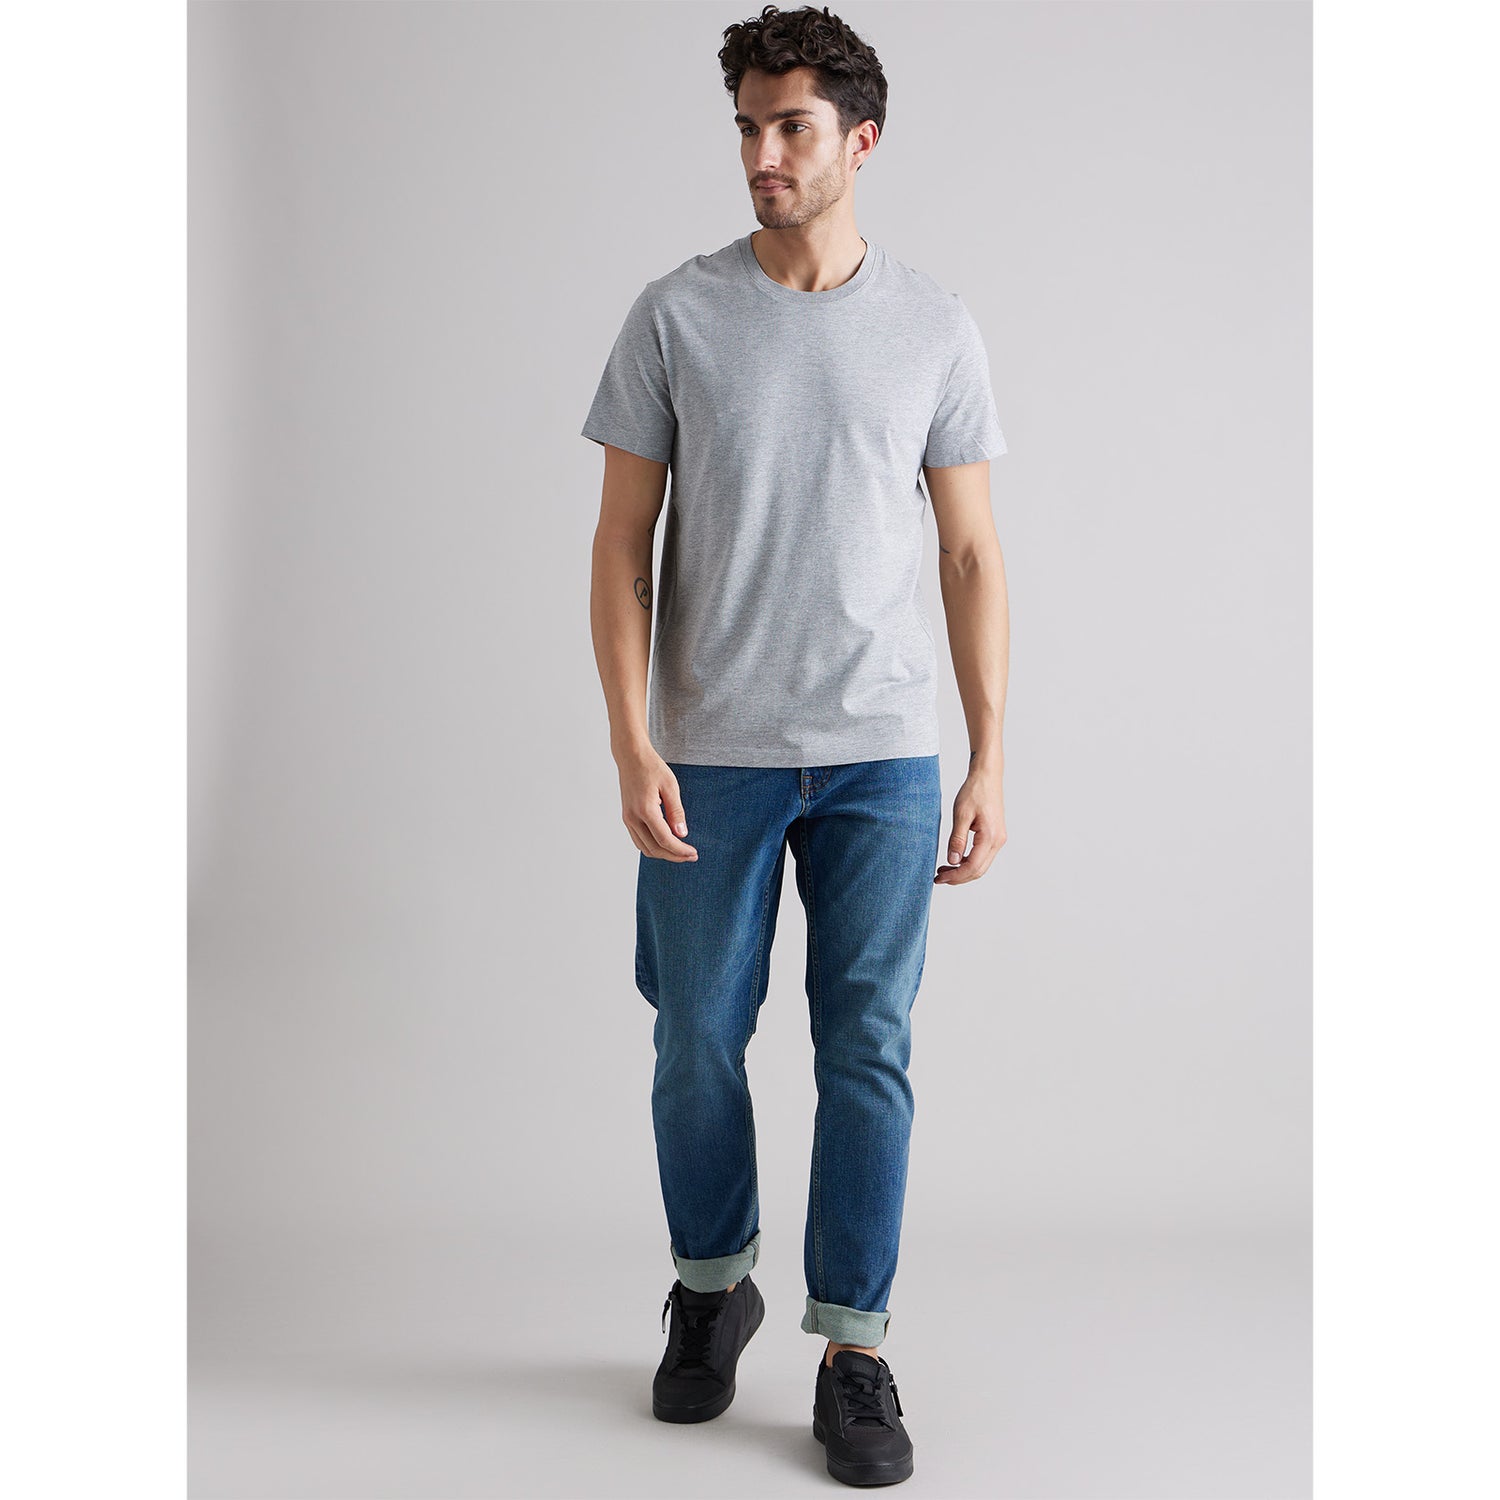 Grey Round Neck Cotton T-shirt (TEBASE)